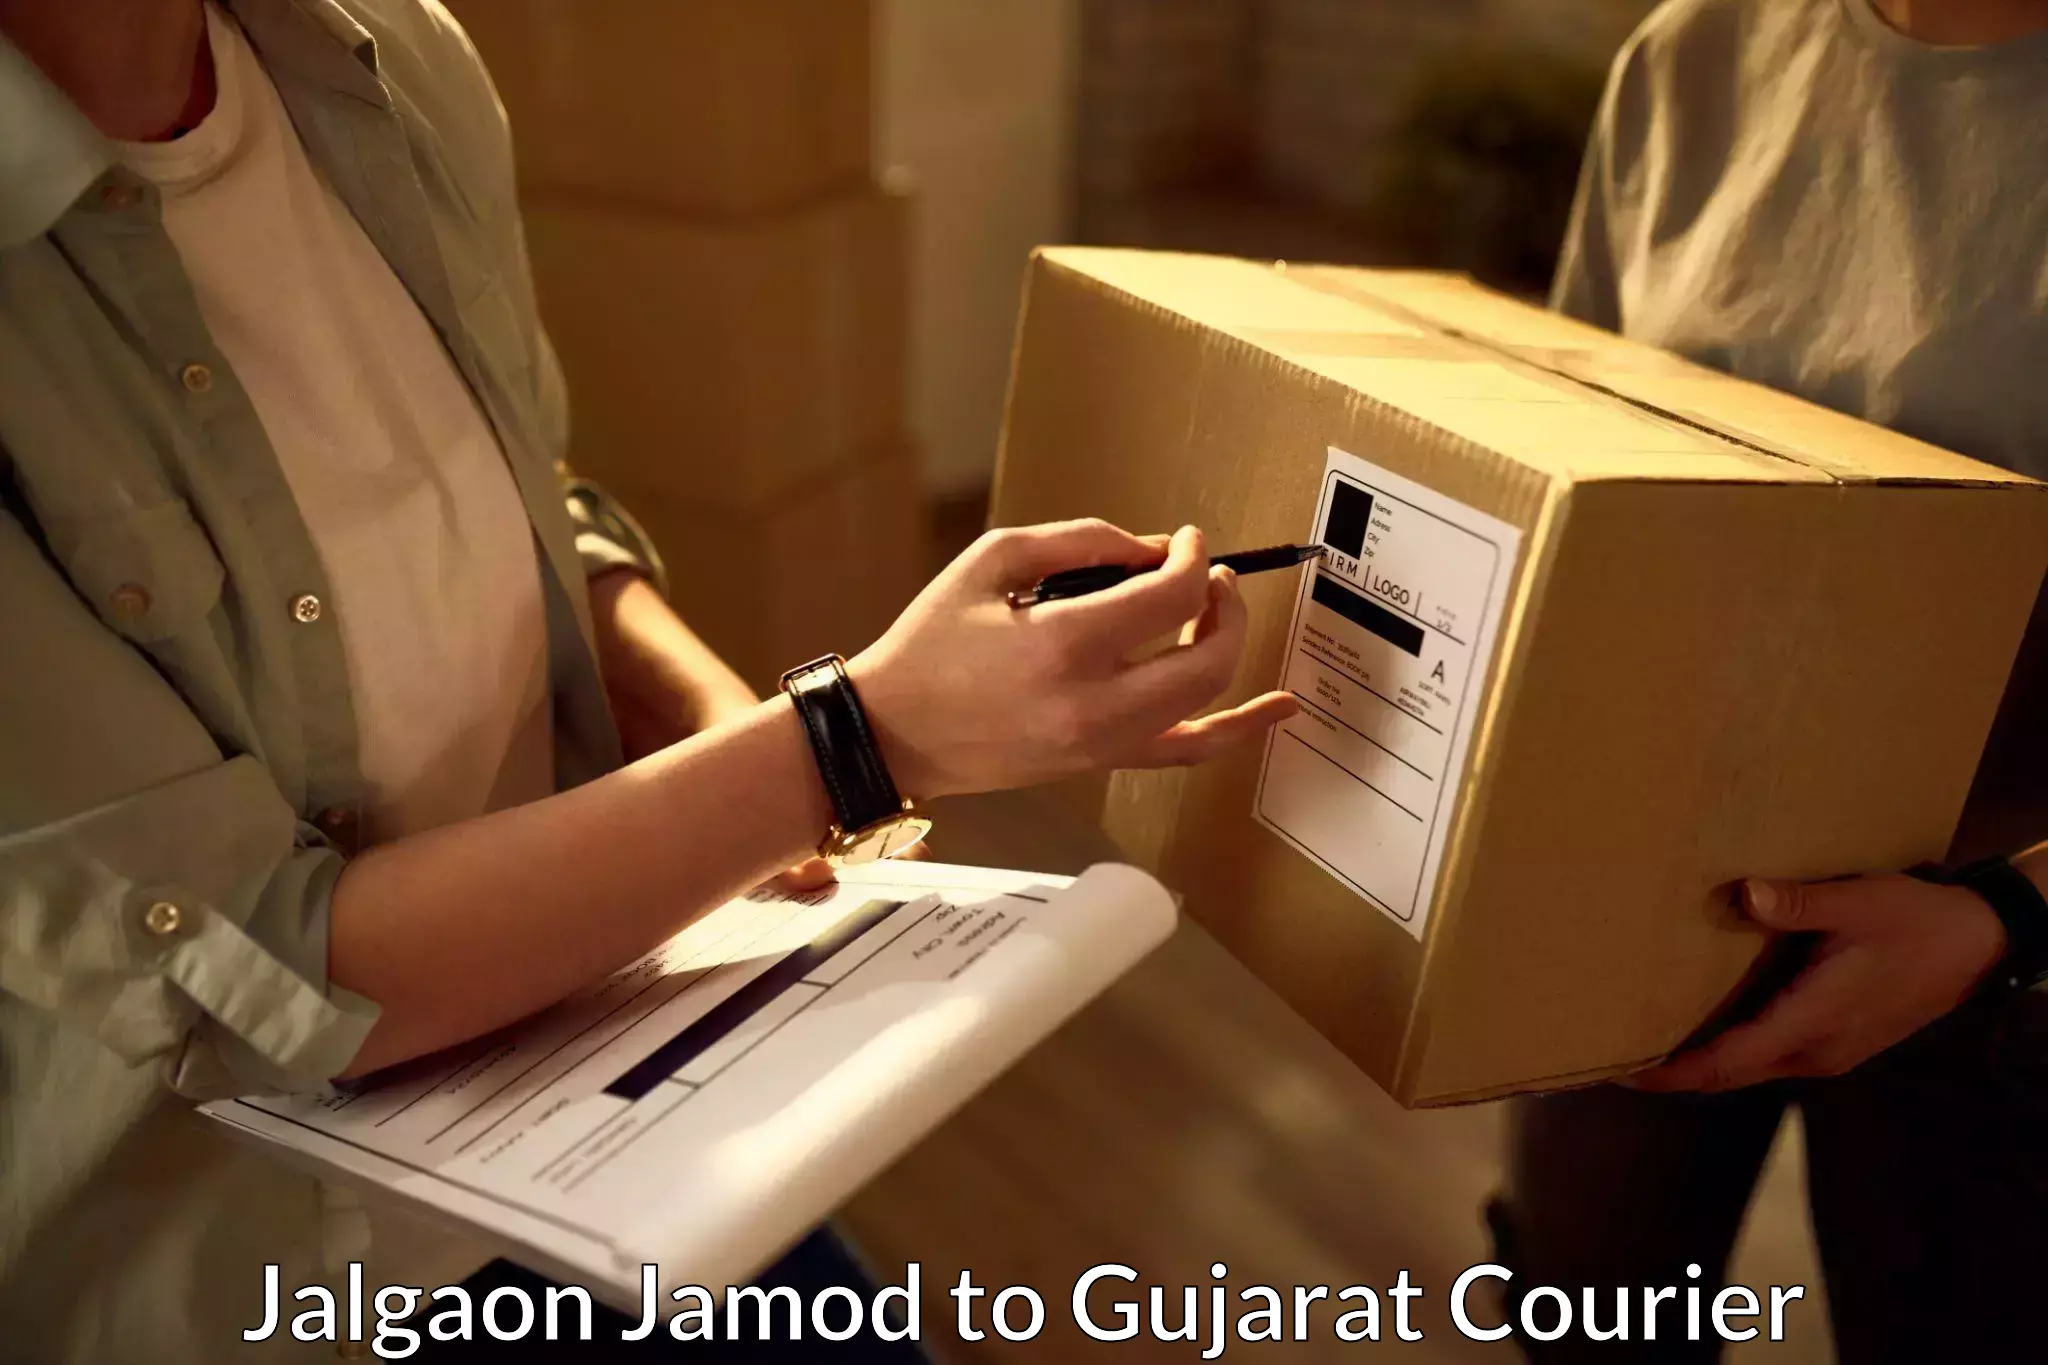 Advanced courier platforms Jalgaon Jamod to Lunawada